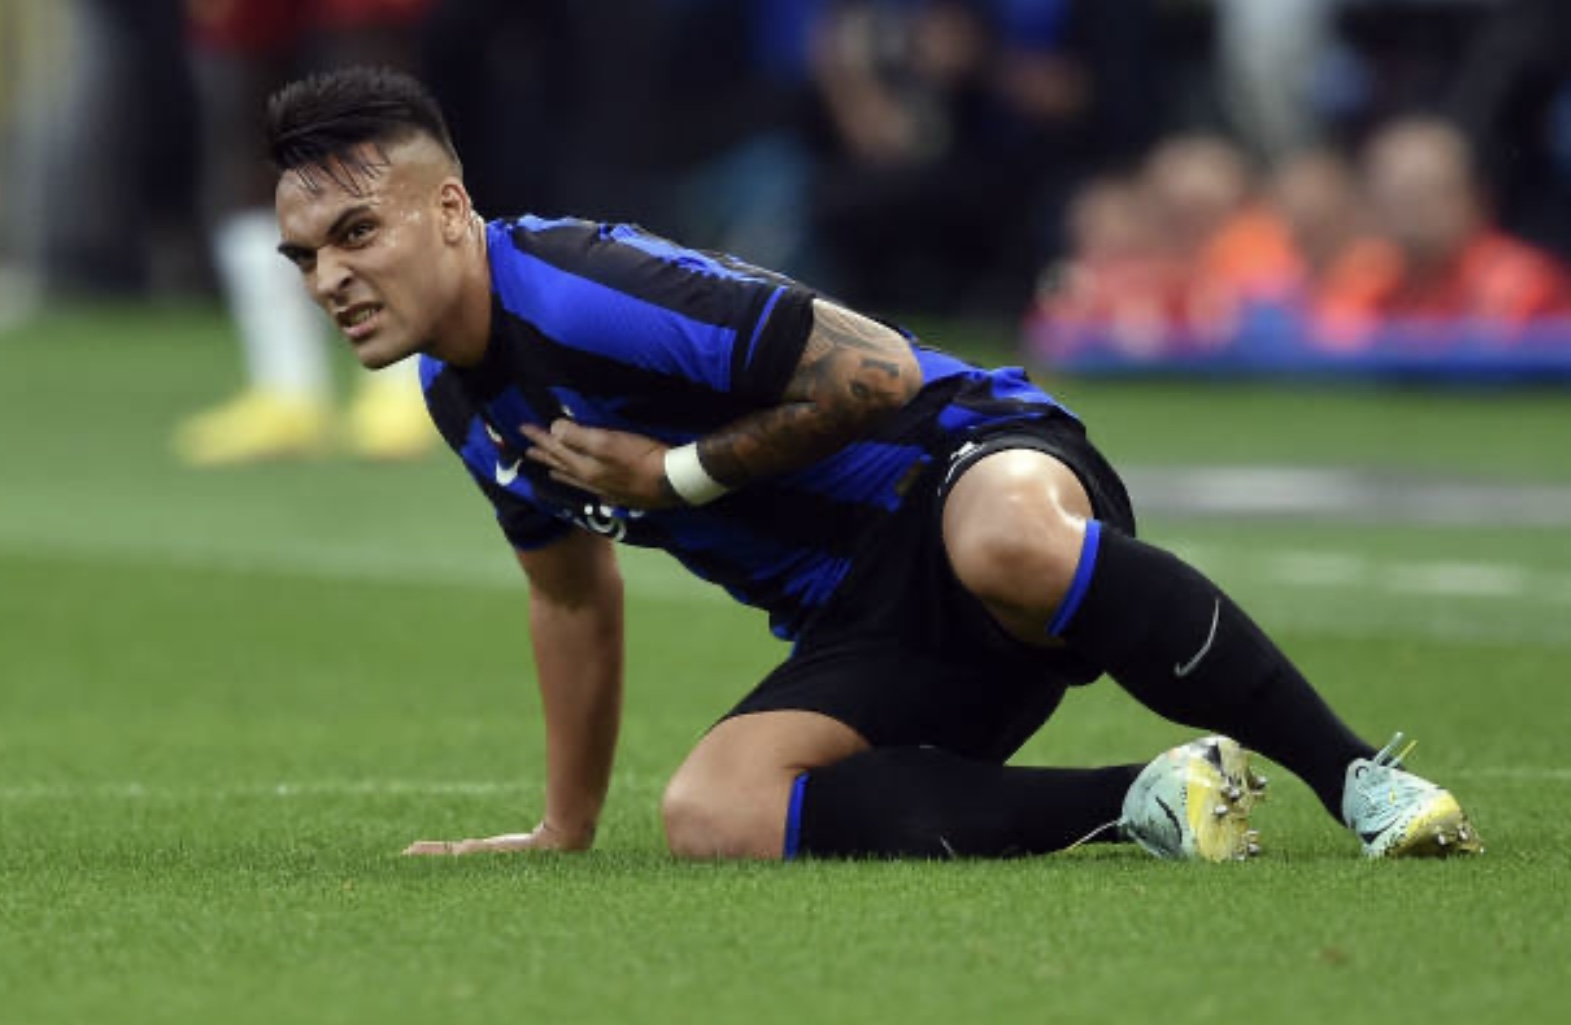 Inter - Roma, dieci pensieri sempre più brutti post - partita 4 Ranocchiate